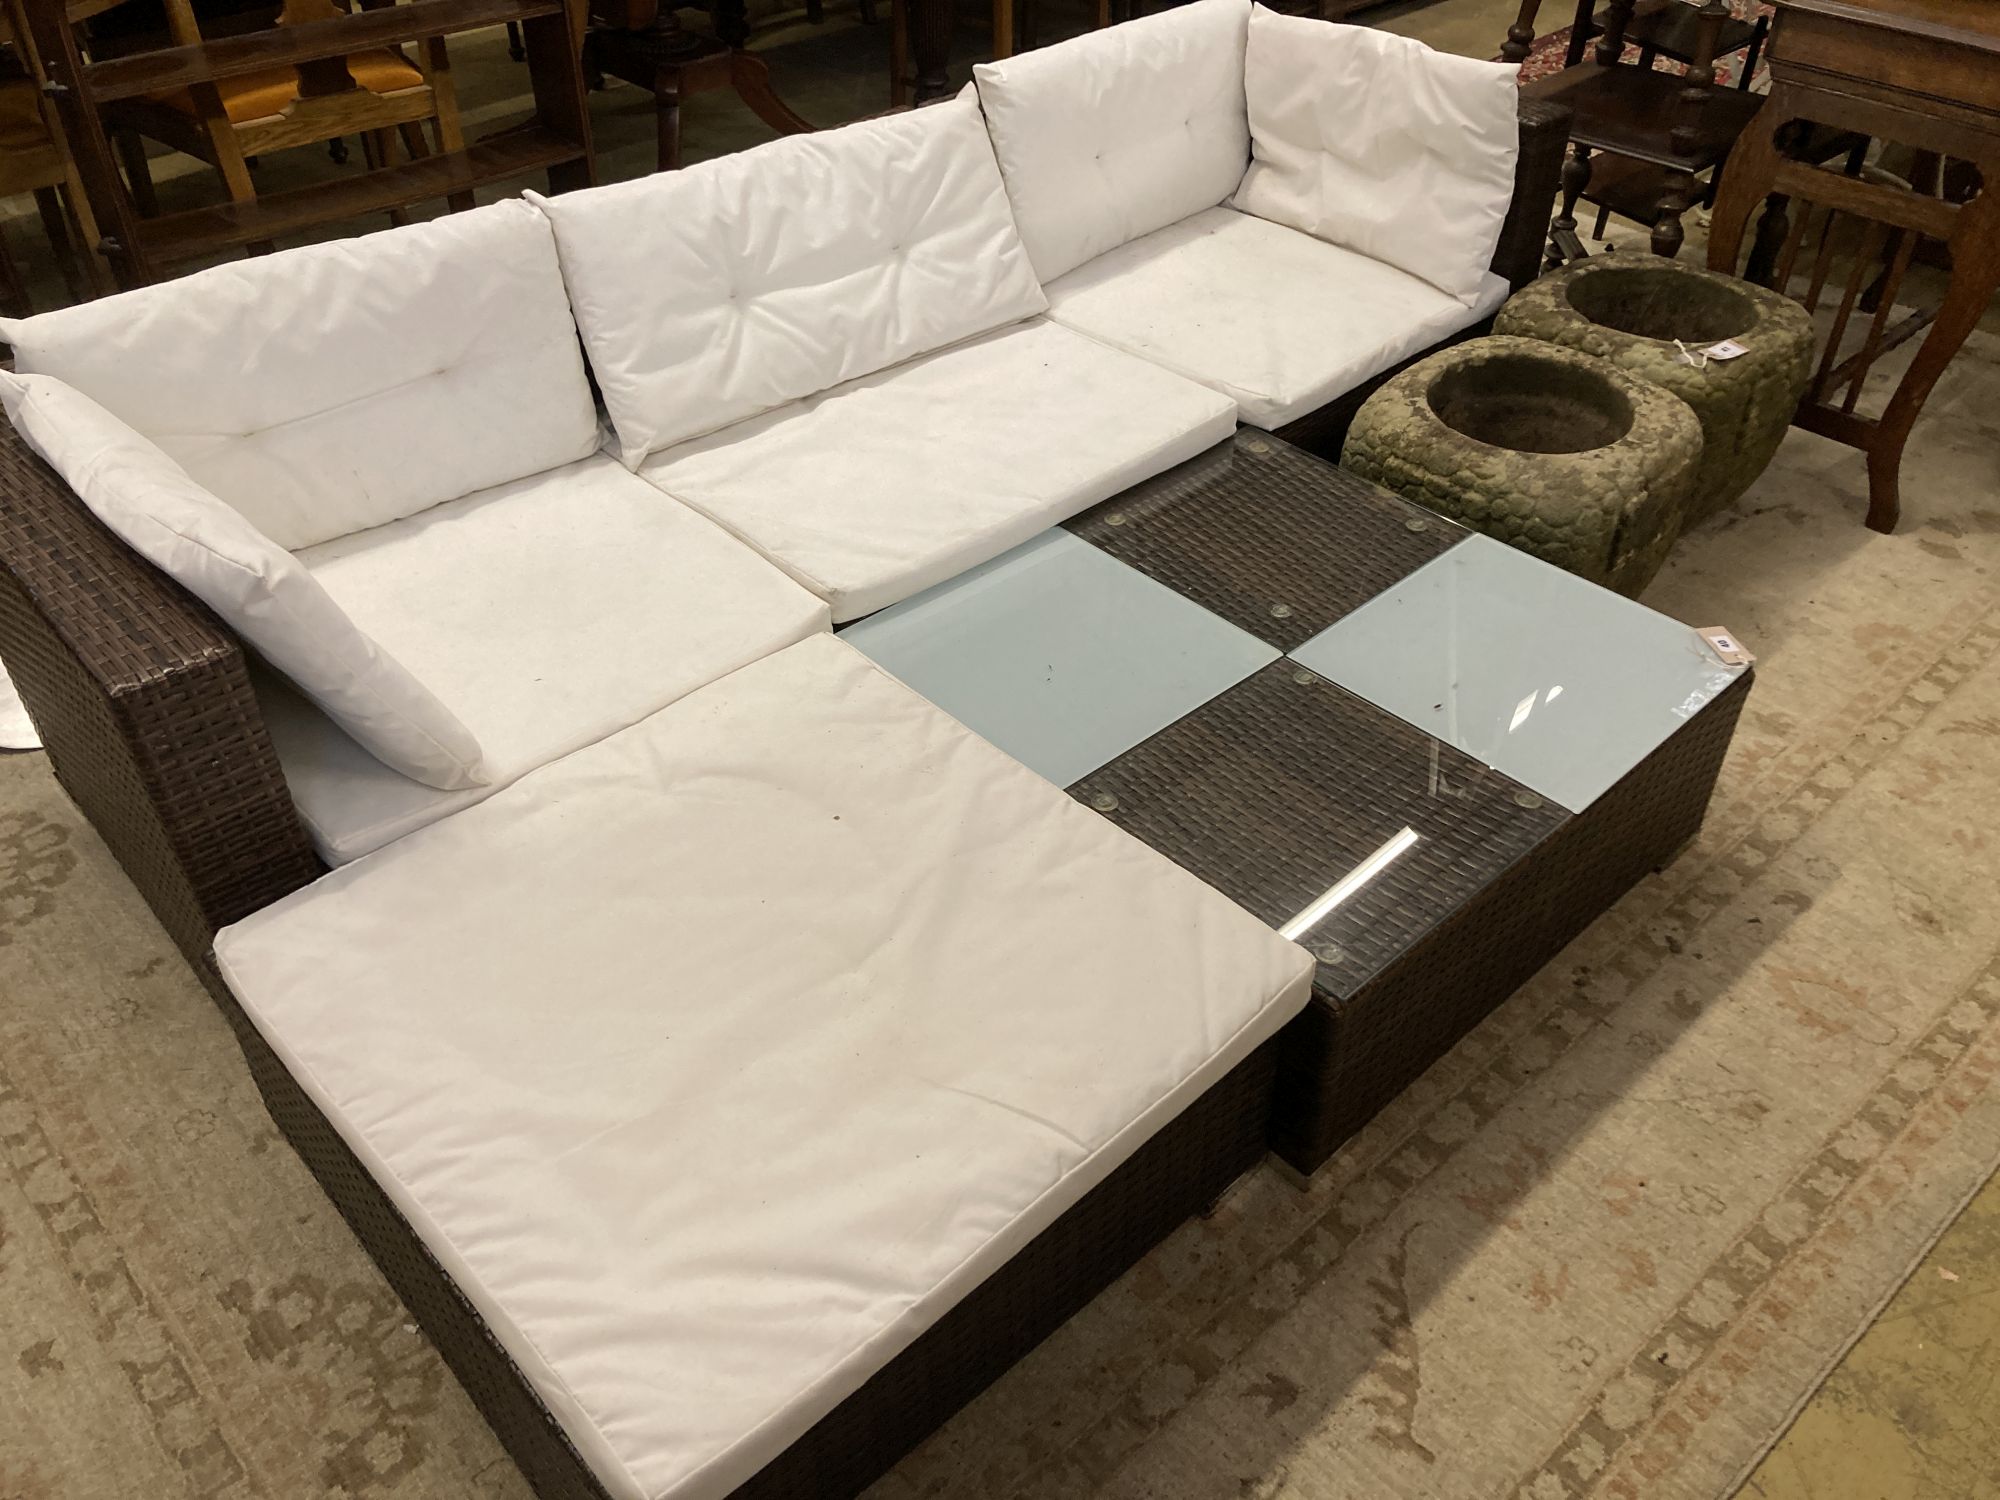 A rattan garden sofa, foot stool and glass top table, sofa width 210cm depth 70cm height 54cm